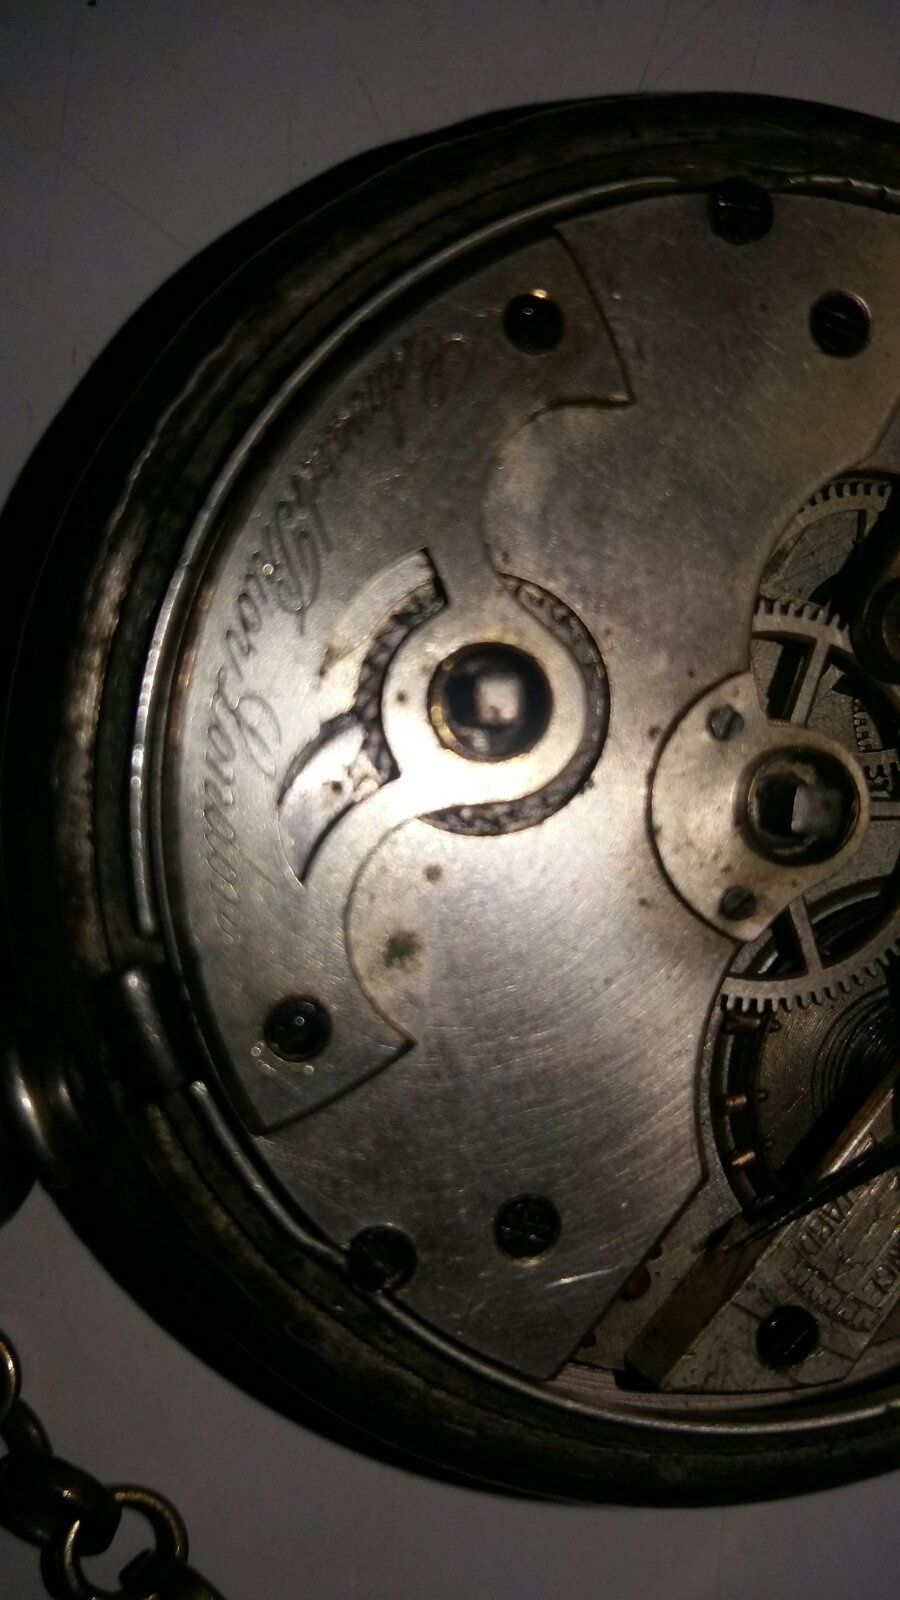 Античен часовник